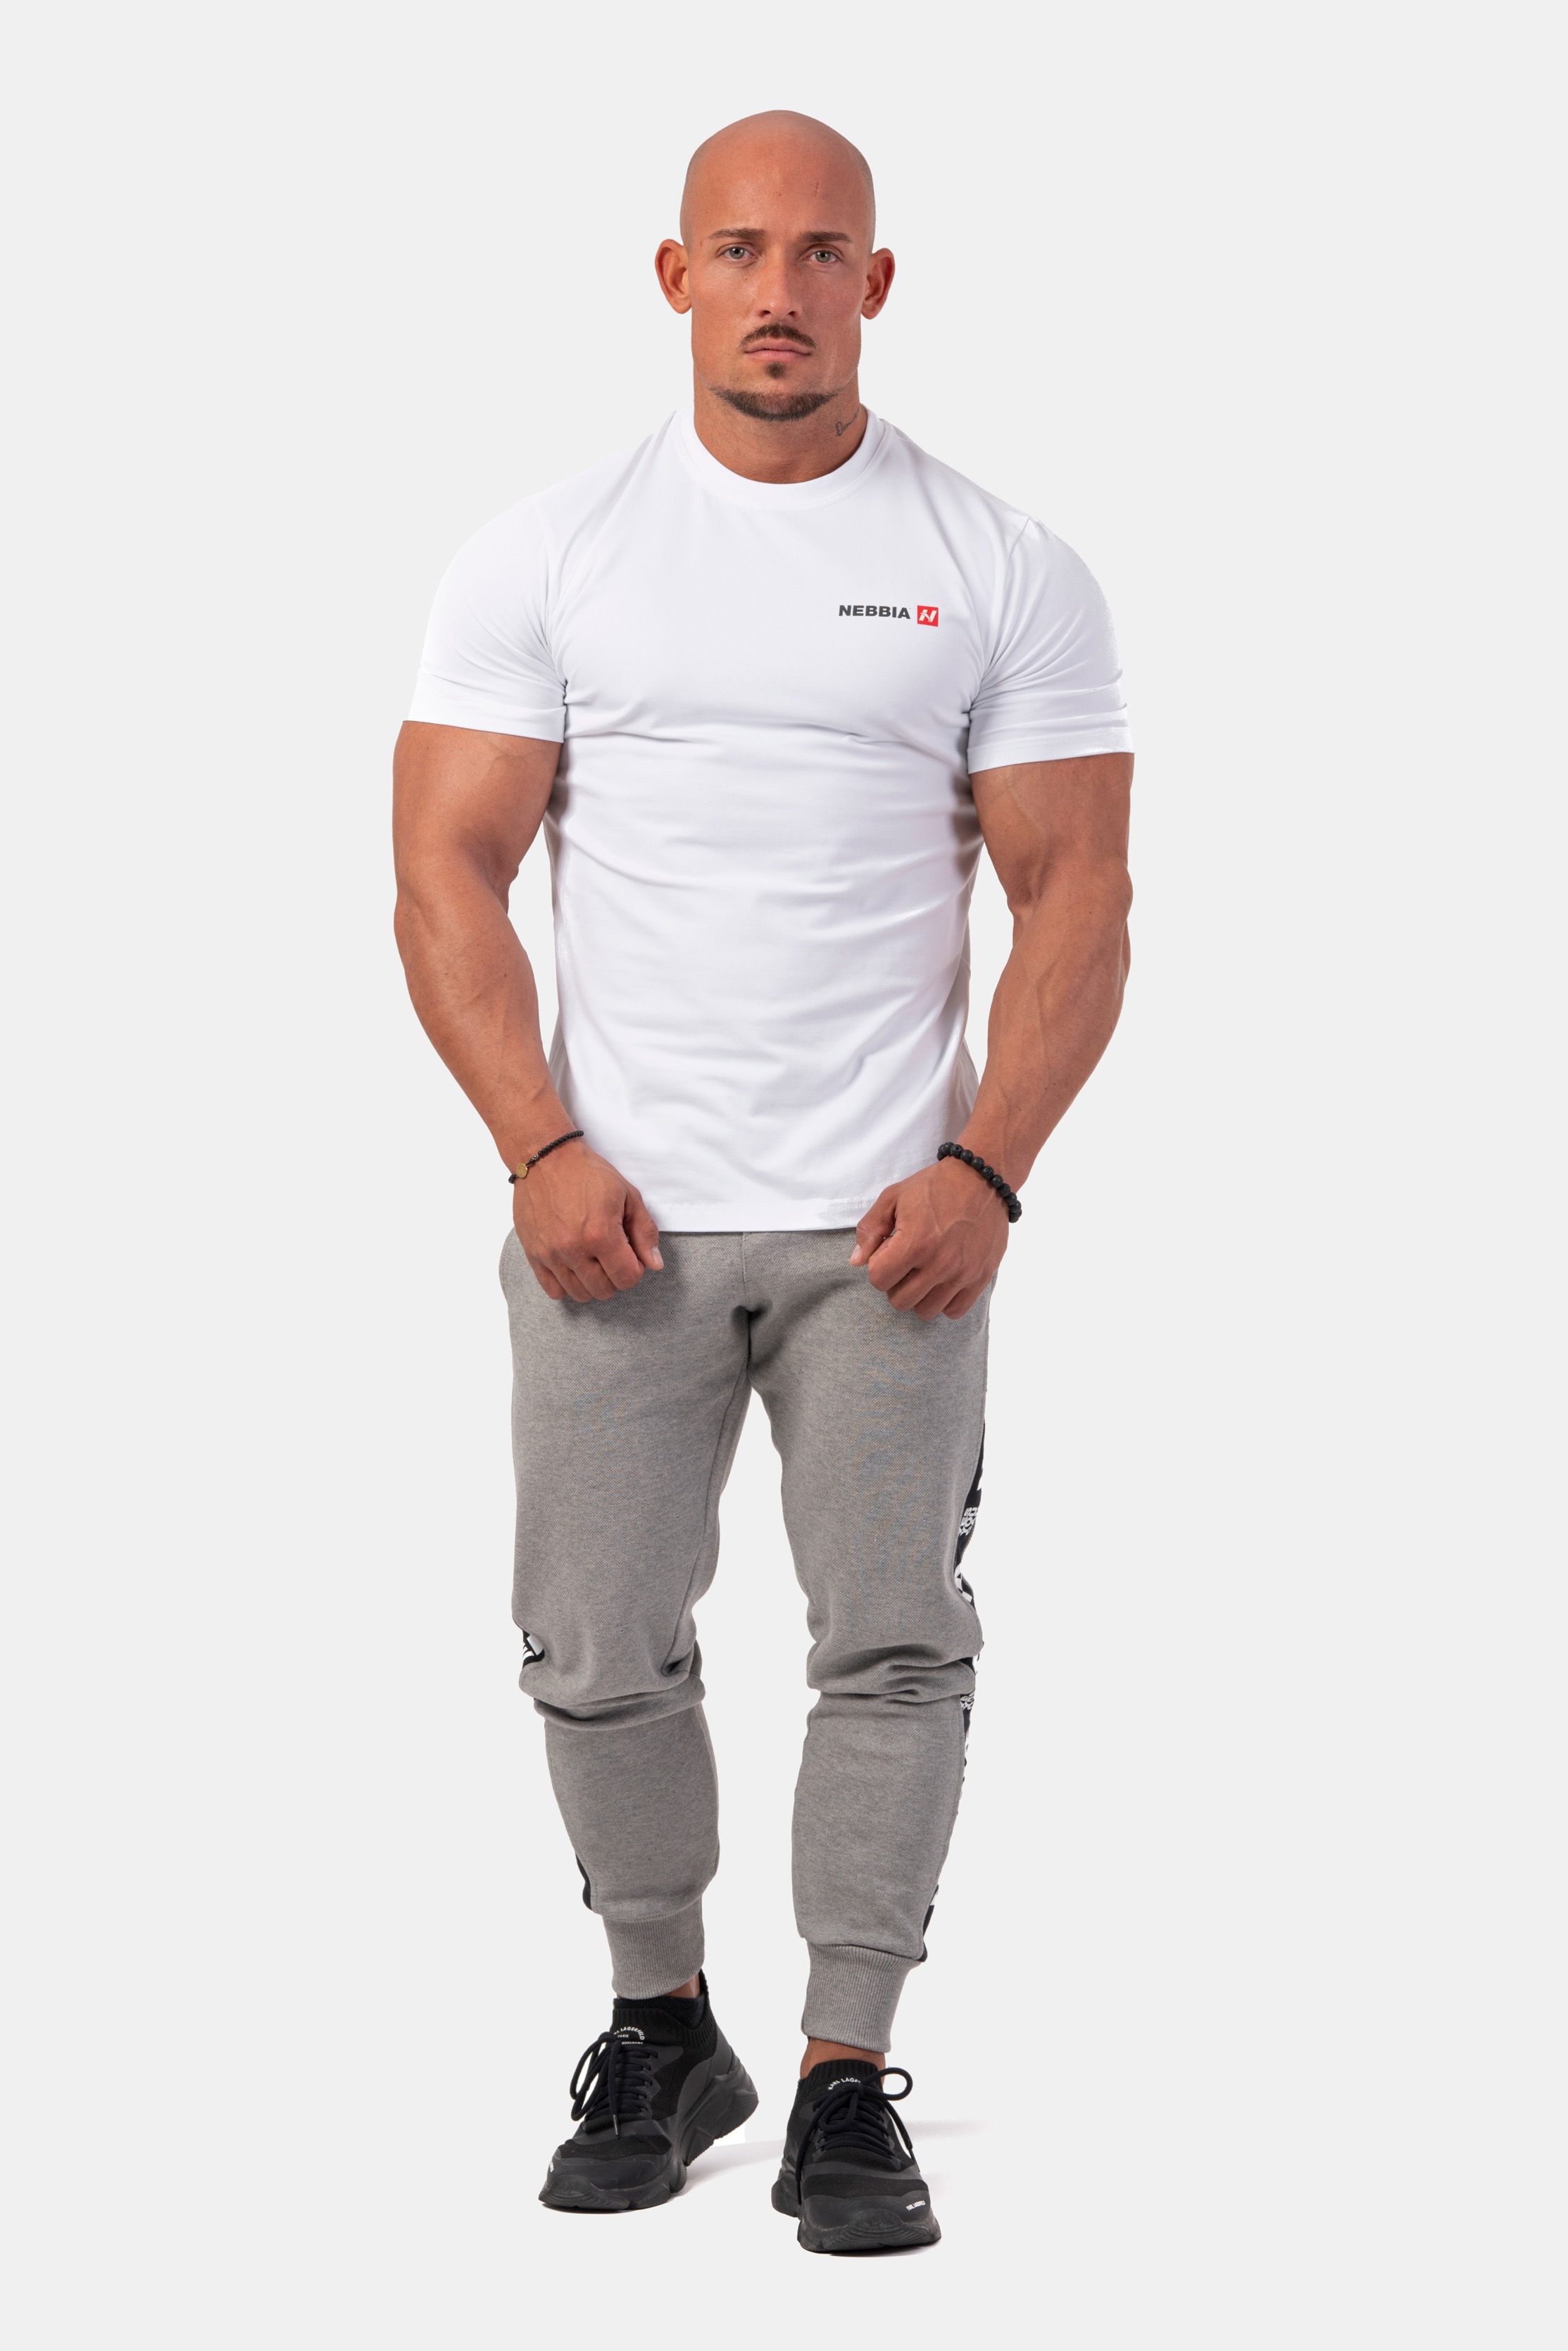 nebbia-sportovni-triko-panske-minimalist-logo-291-white